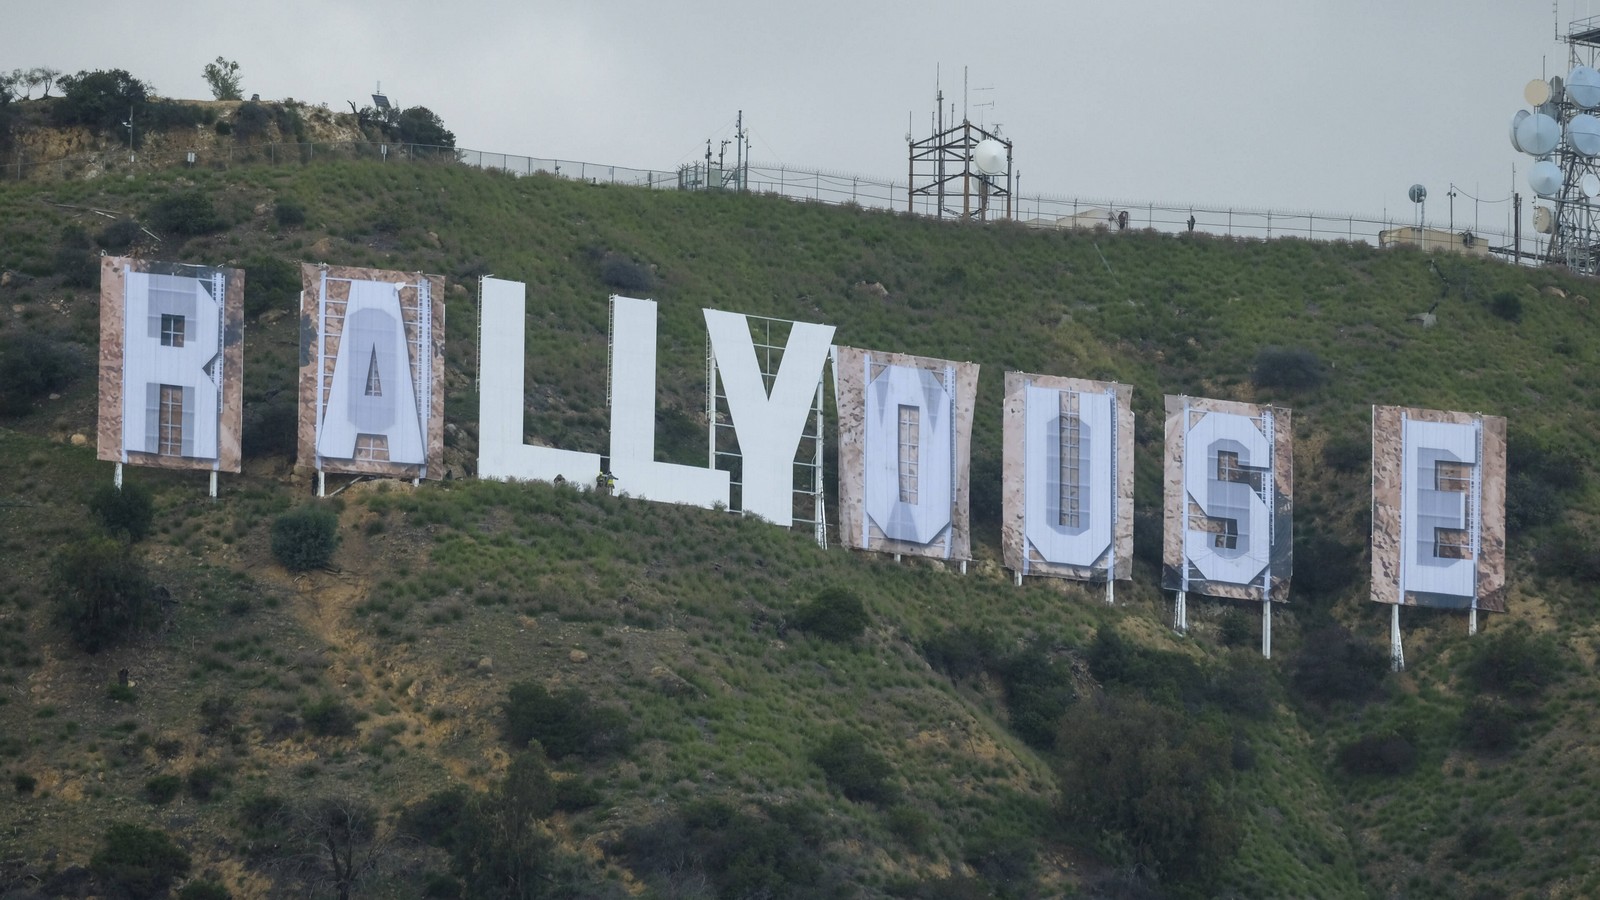 Hollywood-Schriftzug in Los Angeles